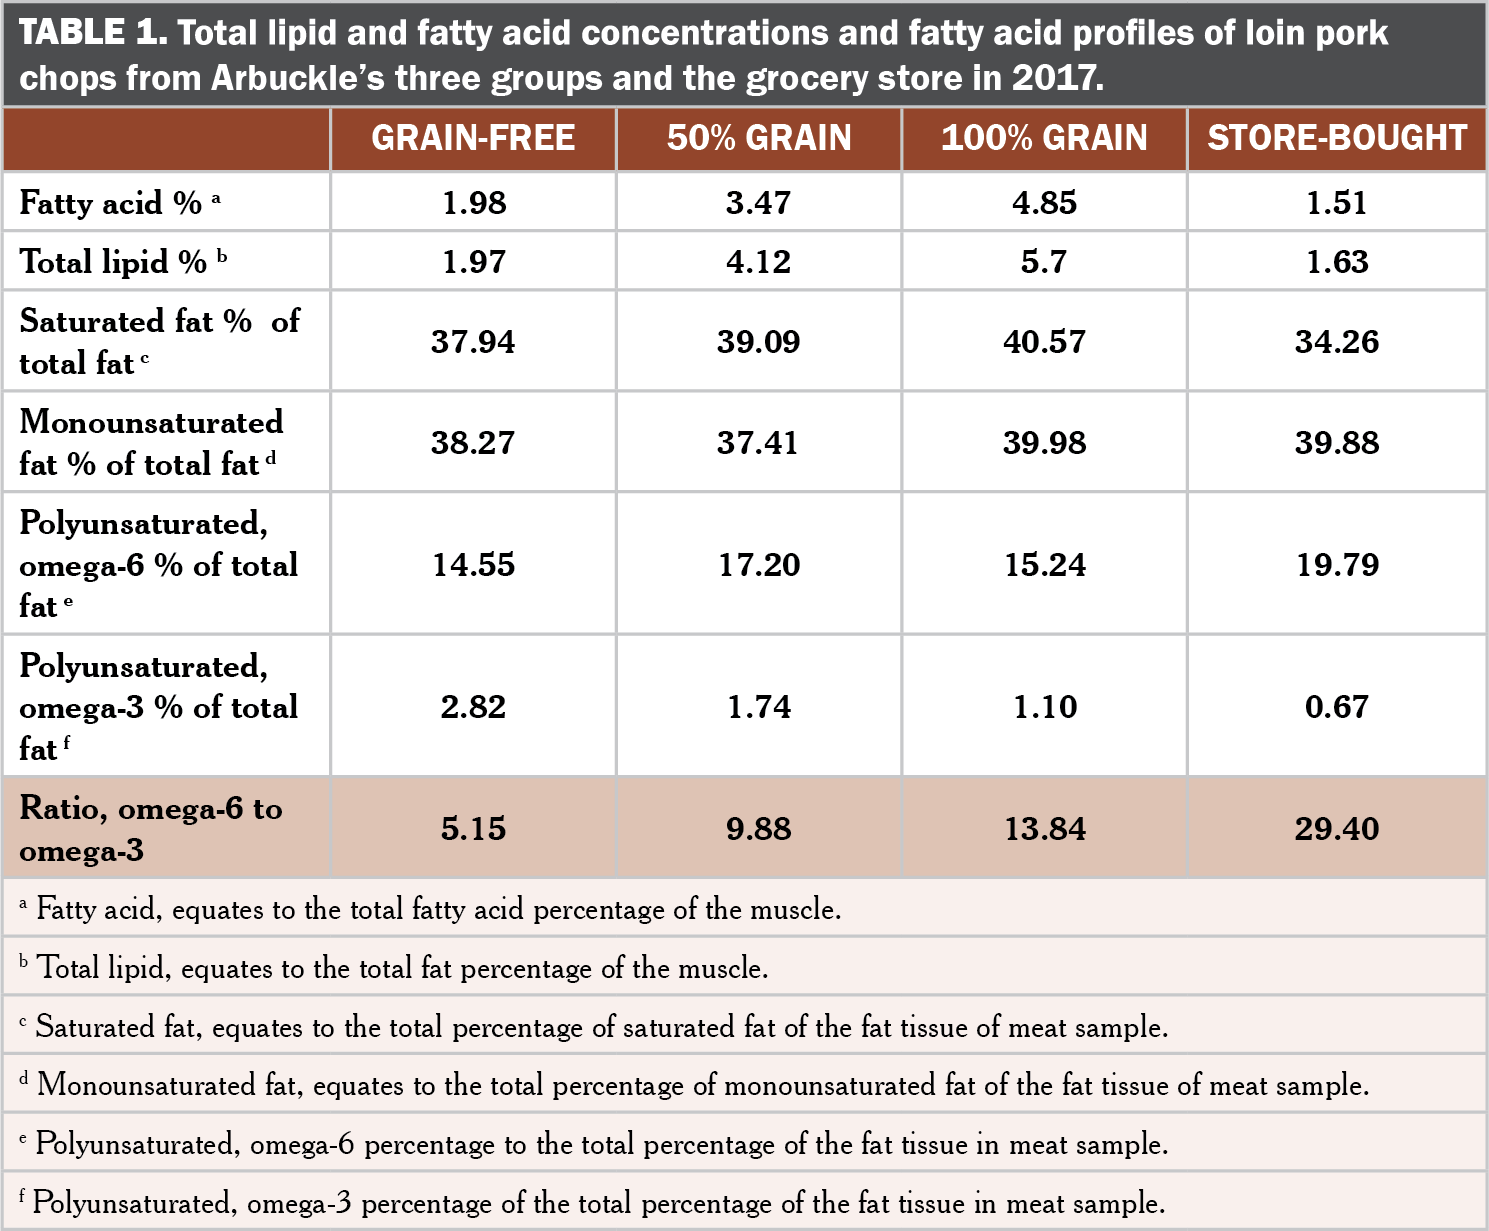 Fat ratio chart showing grain free pork has better omega-6/omega-3 ratio than grain fed or random pork